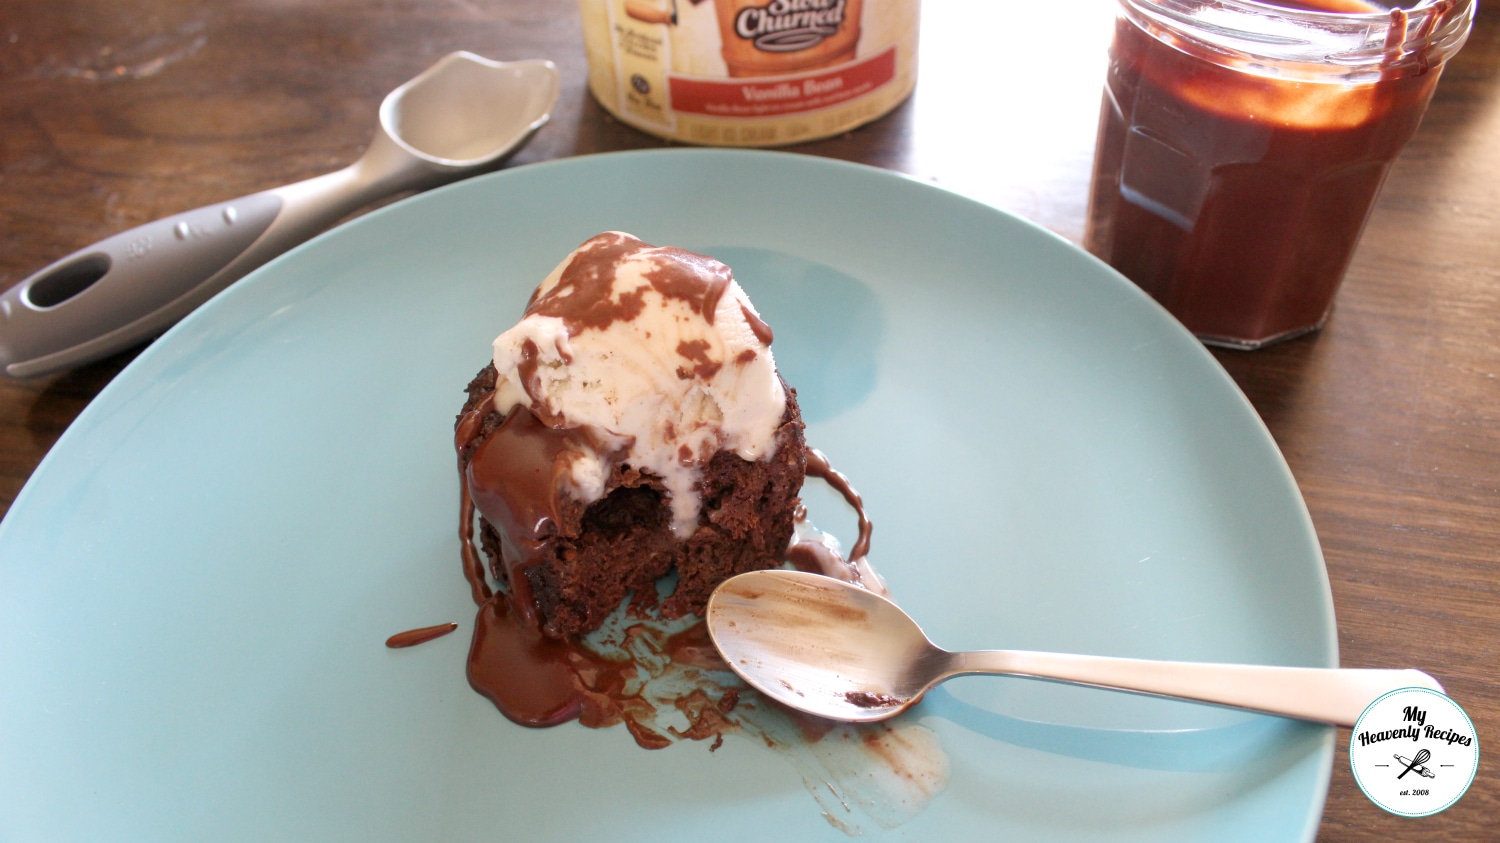 Chocolate Mug Cake topped with vanilla ice cream and chocolate sauce